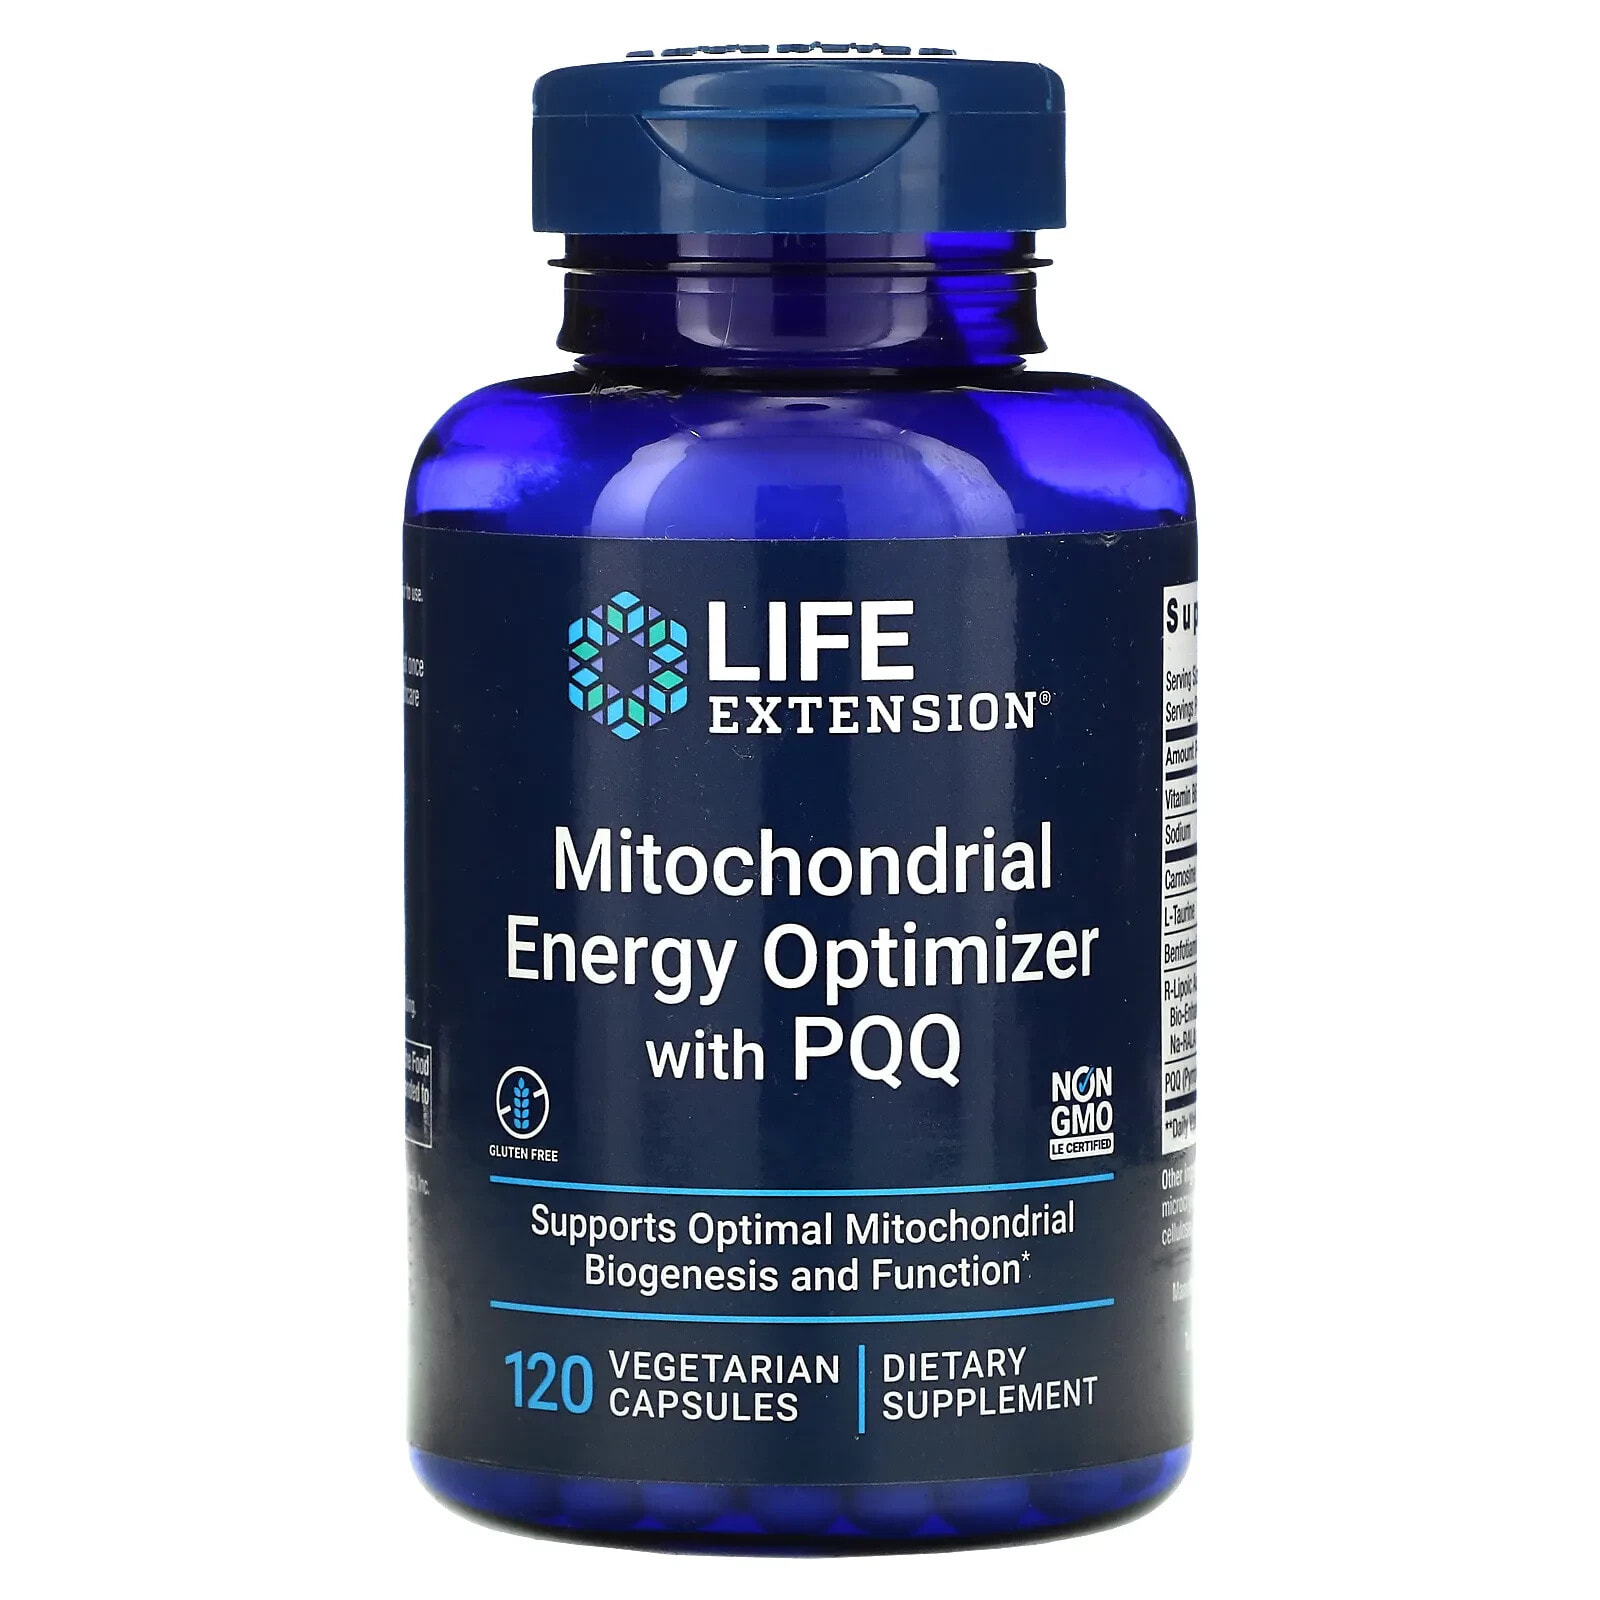 Mitochondrial Energy Optimizer with PQQ, 120 Vegetarian Capsules